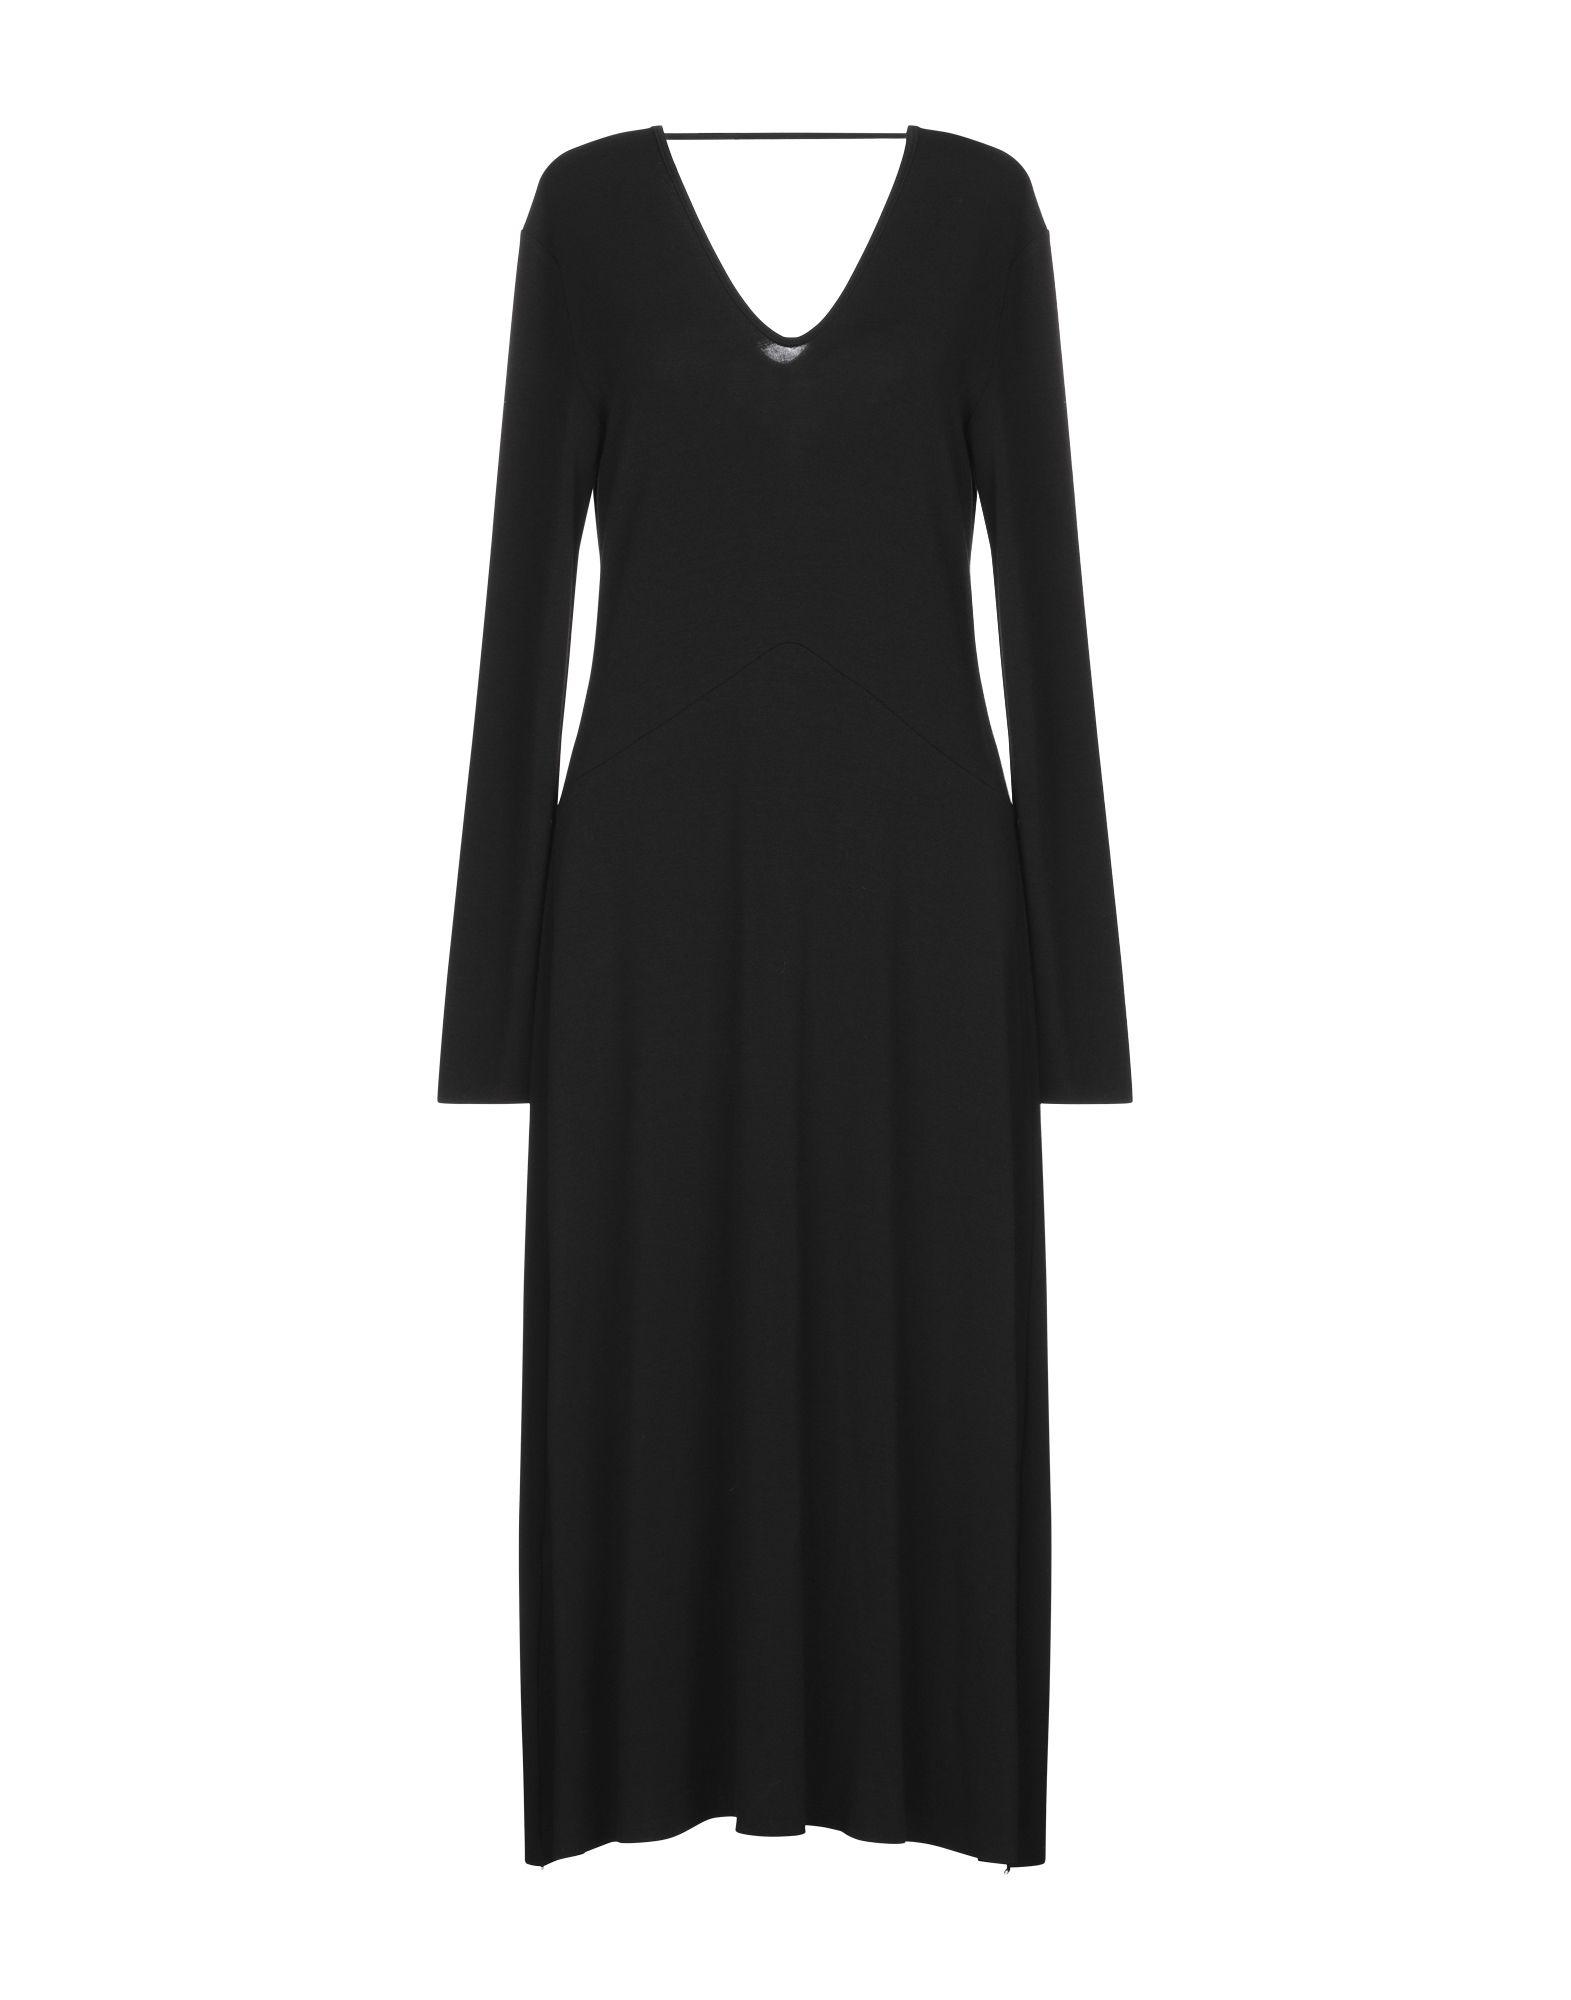 ..,merci Synthetic 3/4 Length Dress in Black - Lyst